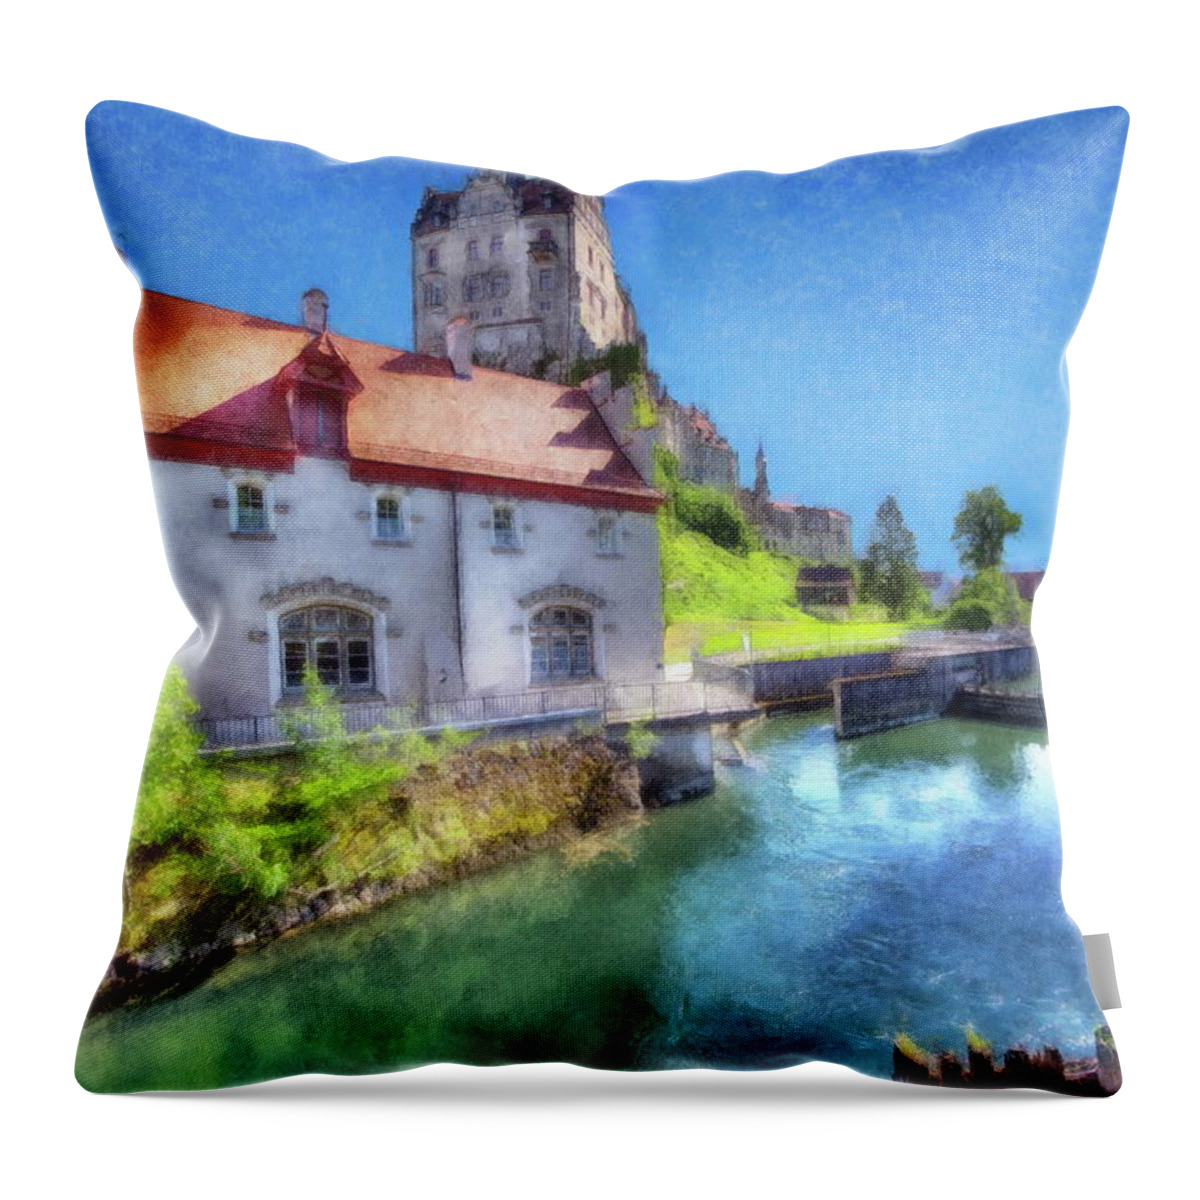 Sigmaringen Castle Throw Pillow featuring the digital art Sigmaringen Castle by Jerzy Czyz